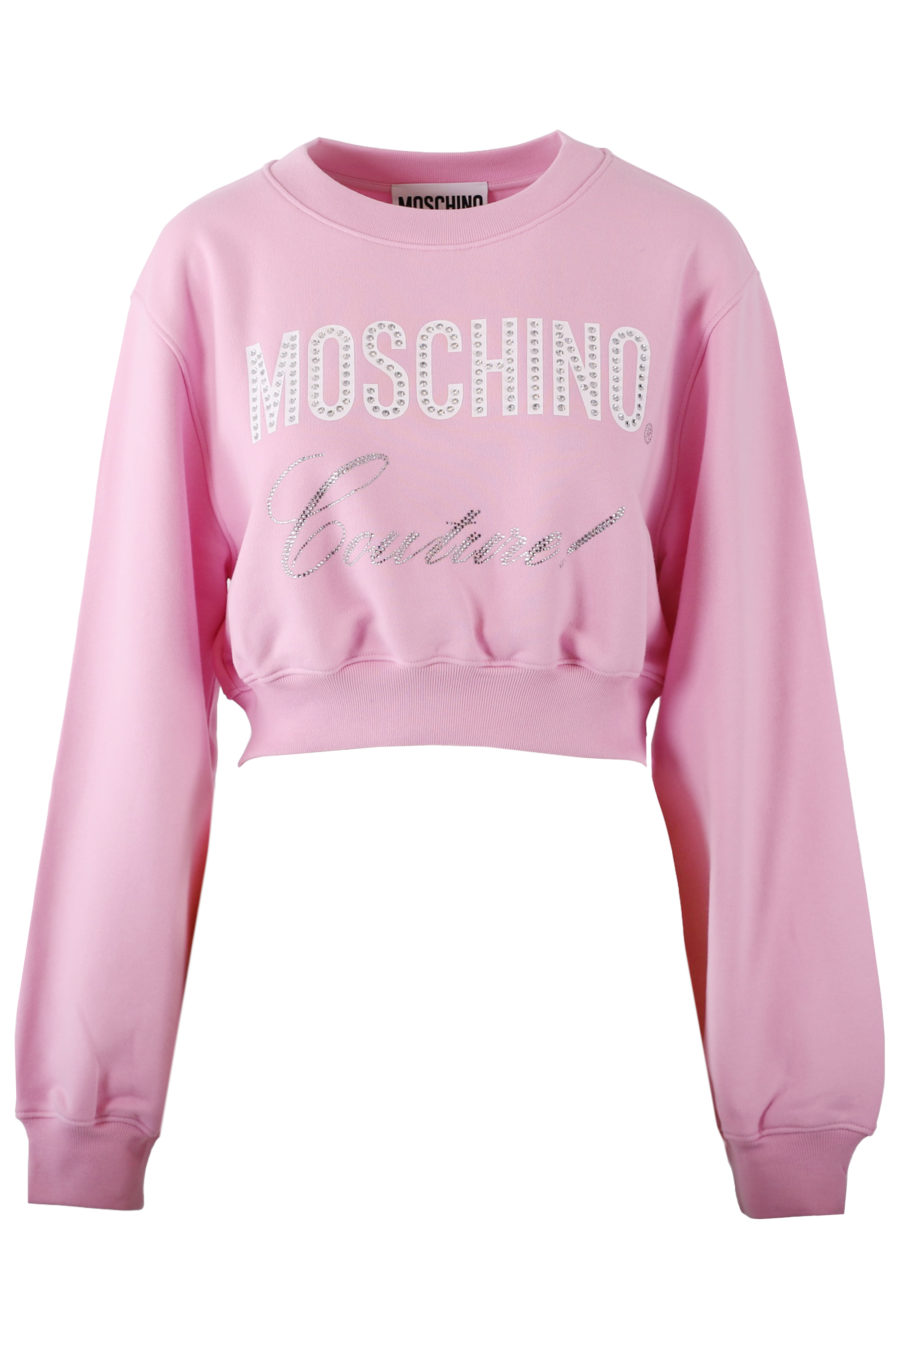 Rosa Sweatshirt mit glänzendem Logo - IMG 7168 copy